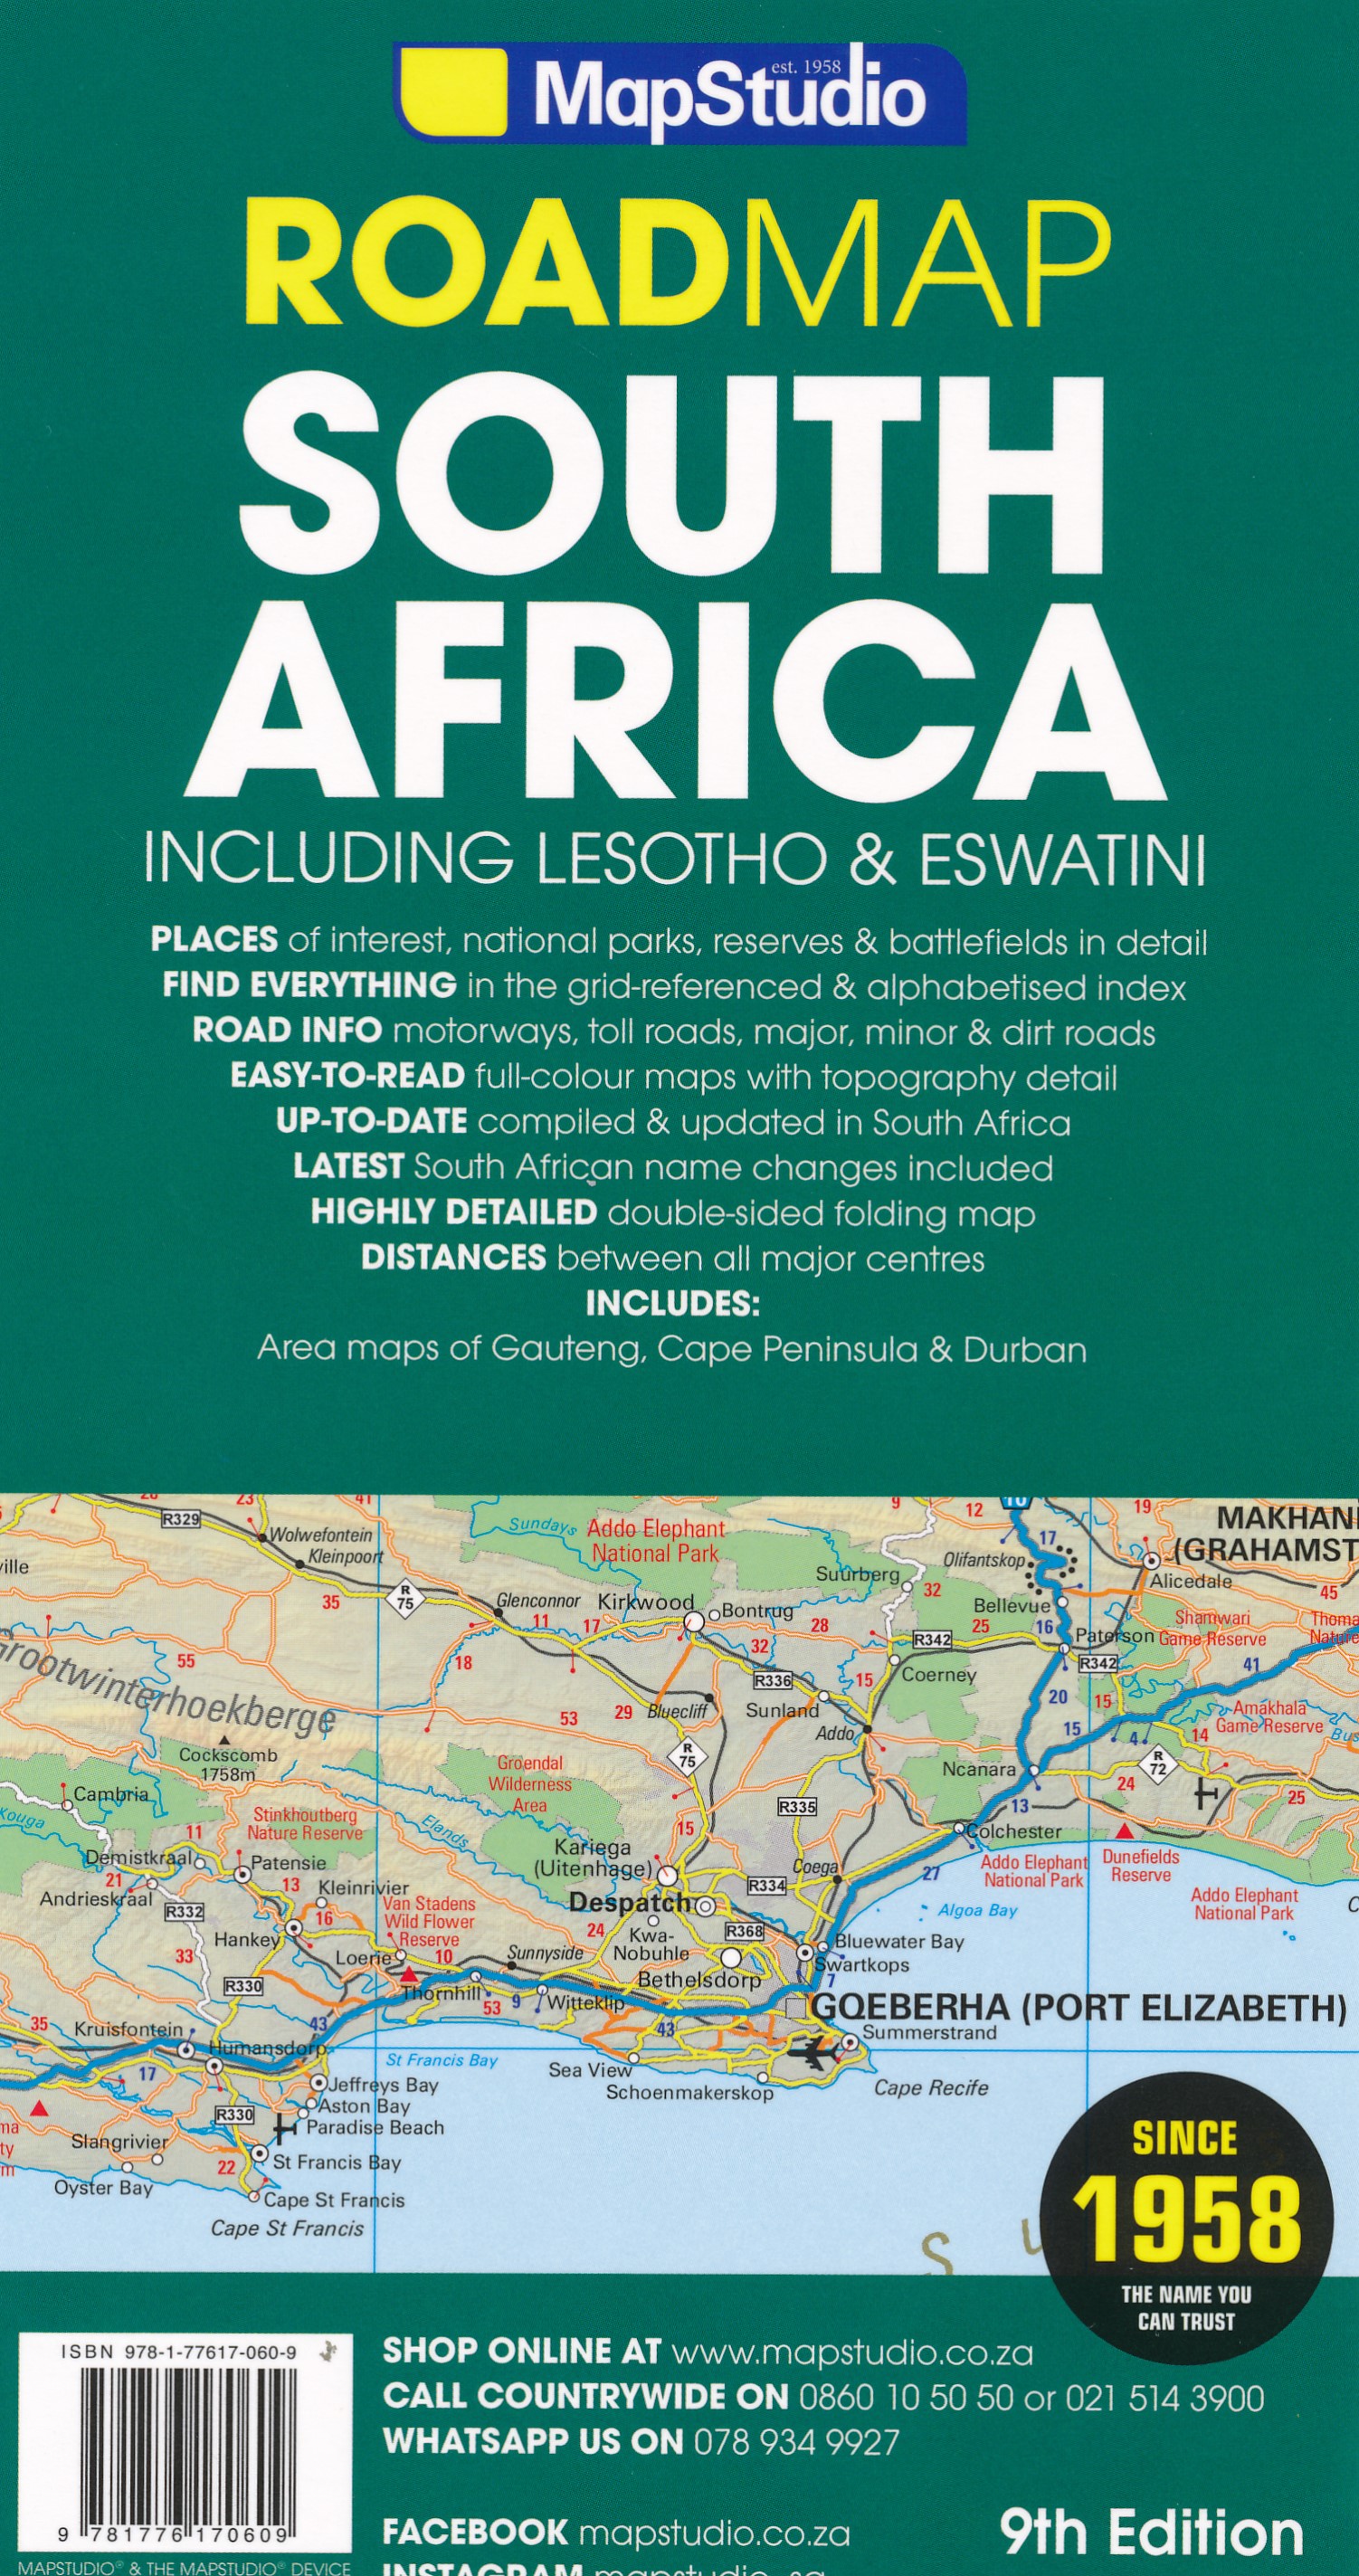 Online bestellen: Wegenkaart - landkaart Zuid-Afrika - South Africa, Lesotho & Swaziland | MapStudio